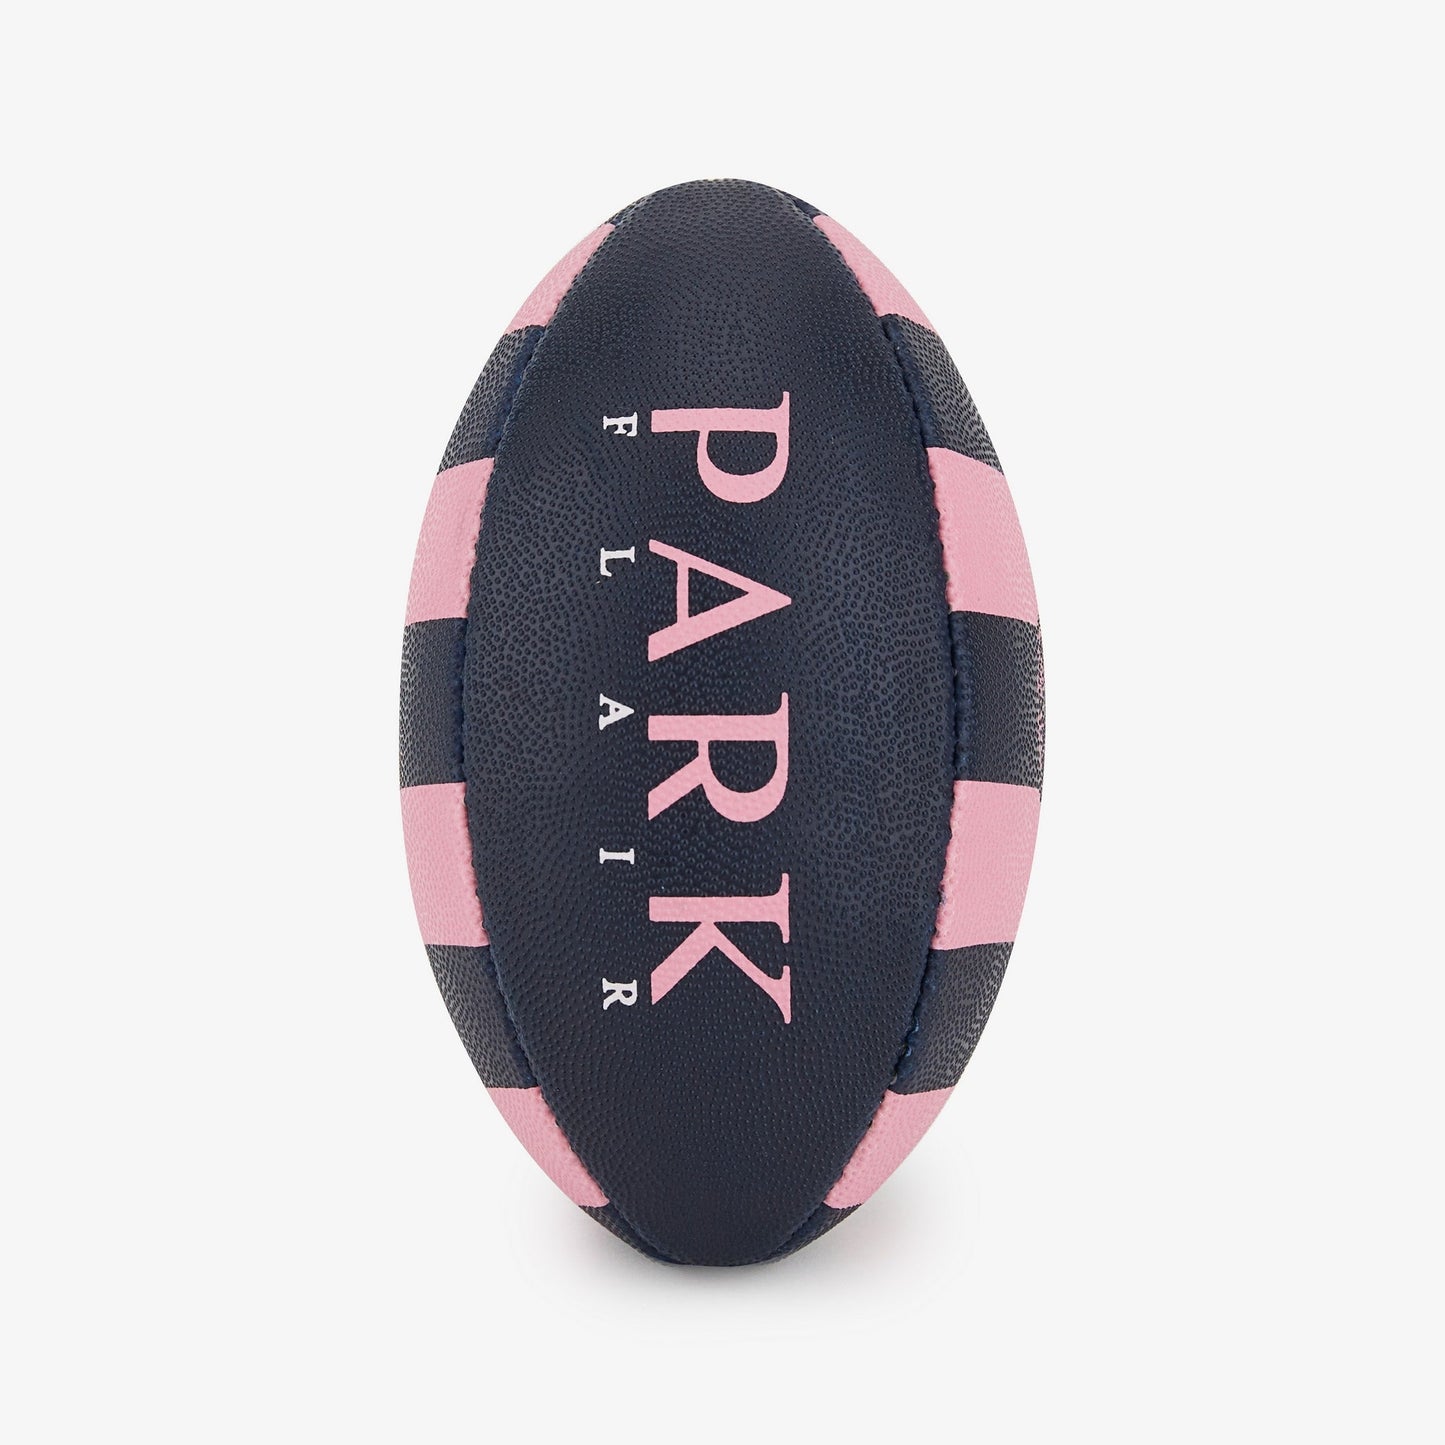 Mini ballon de rugby cerclé bicolore - Image 3